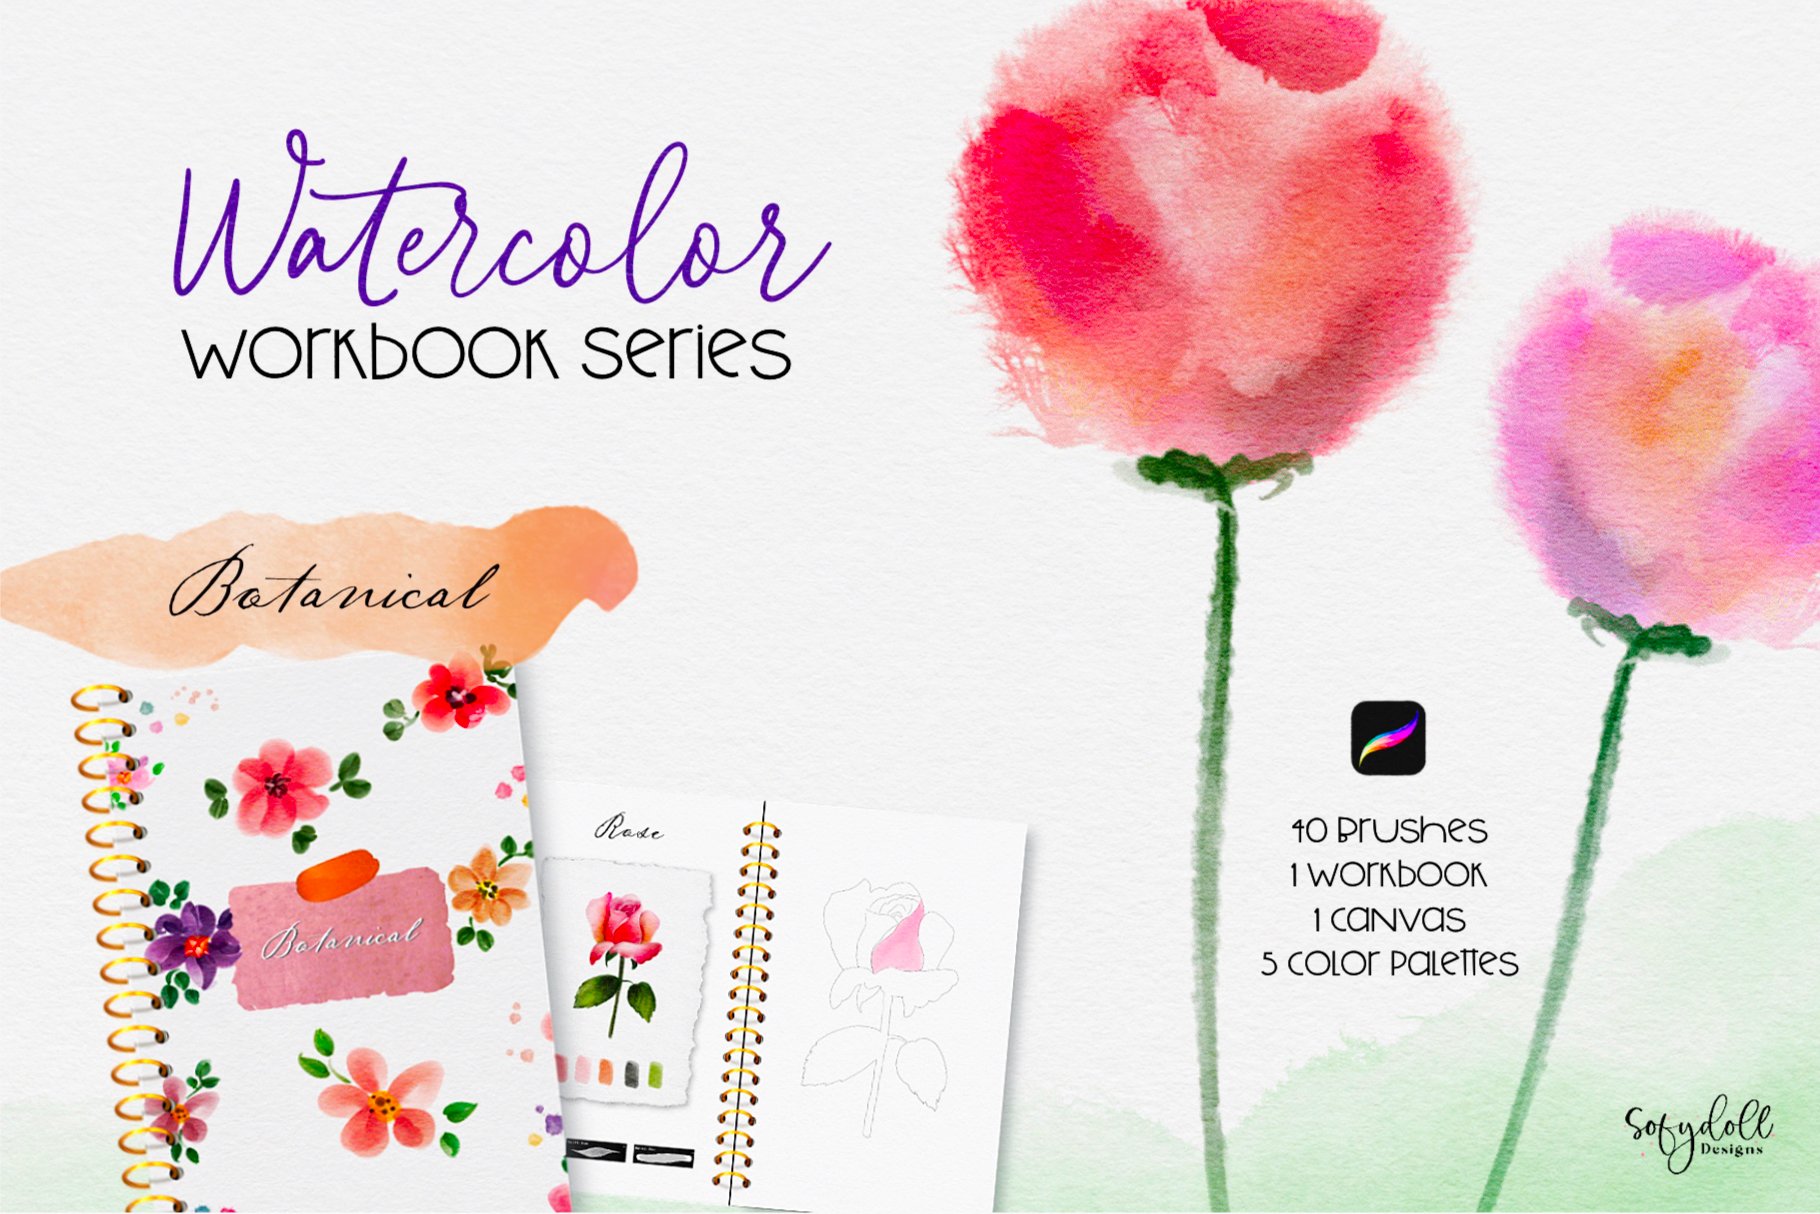 Watercolor Workbook Series - Botanical